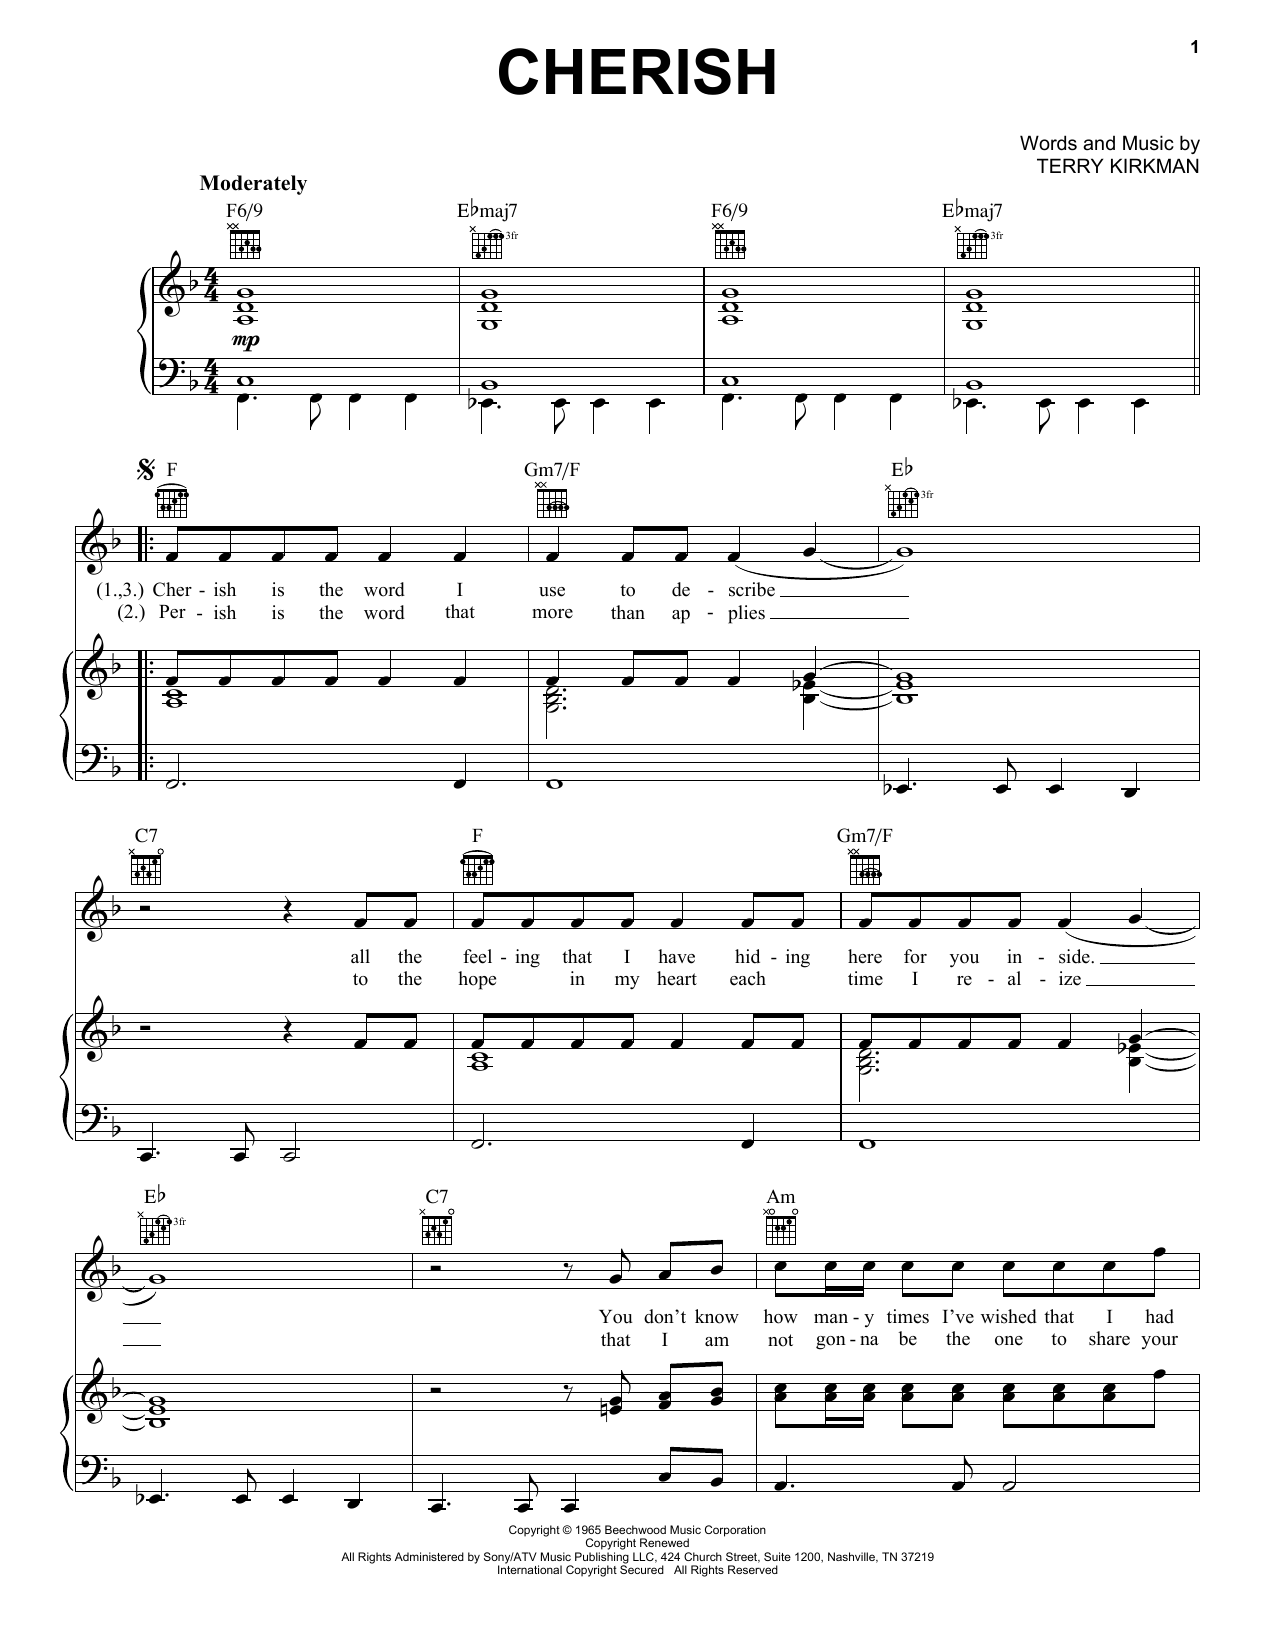 The Association Cherish Sheet Music Notes & Chords for Melody Line, Lyrics & Chords - Download or Print PDF